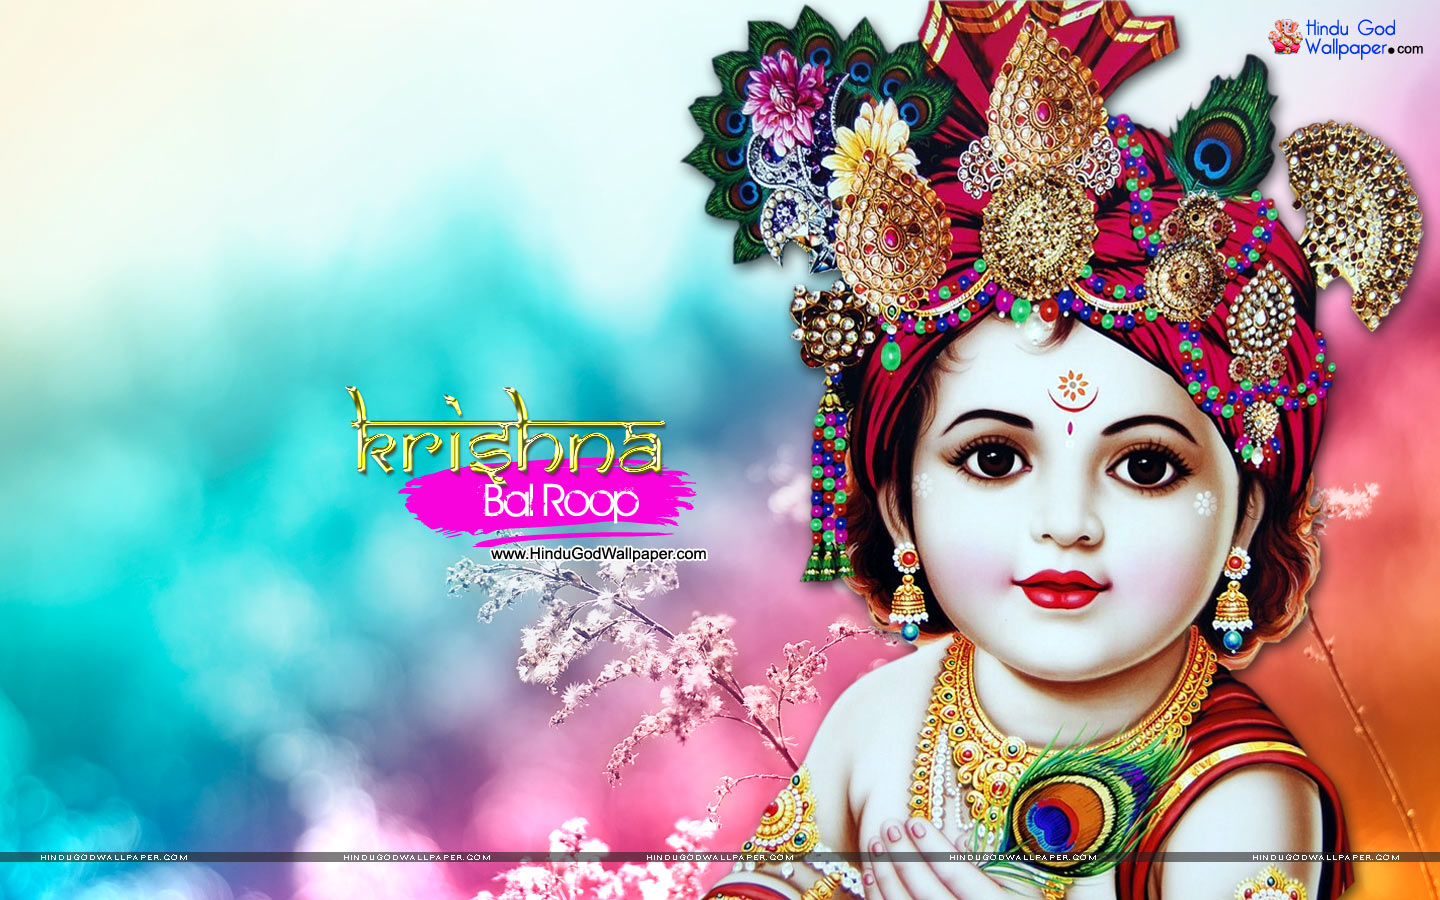 Happy Krishna Janmashtami HD Wallpaper